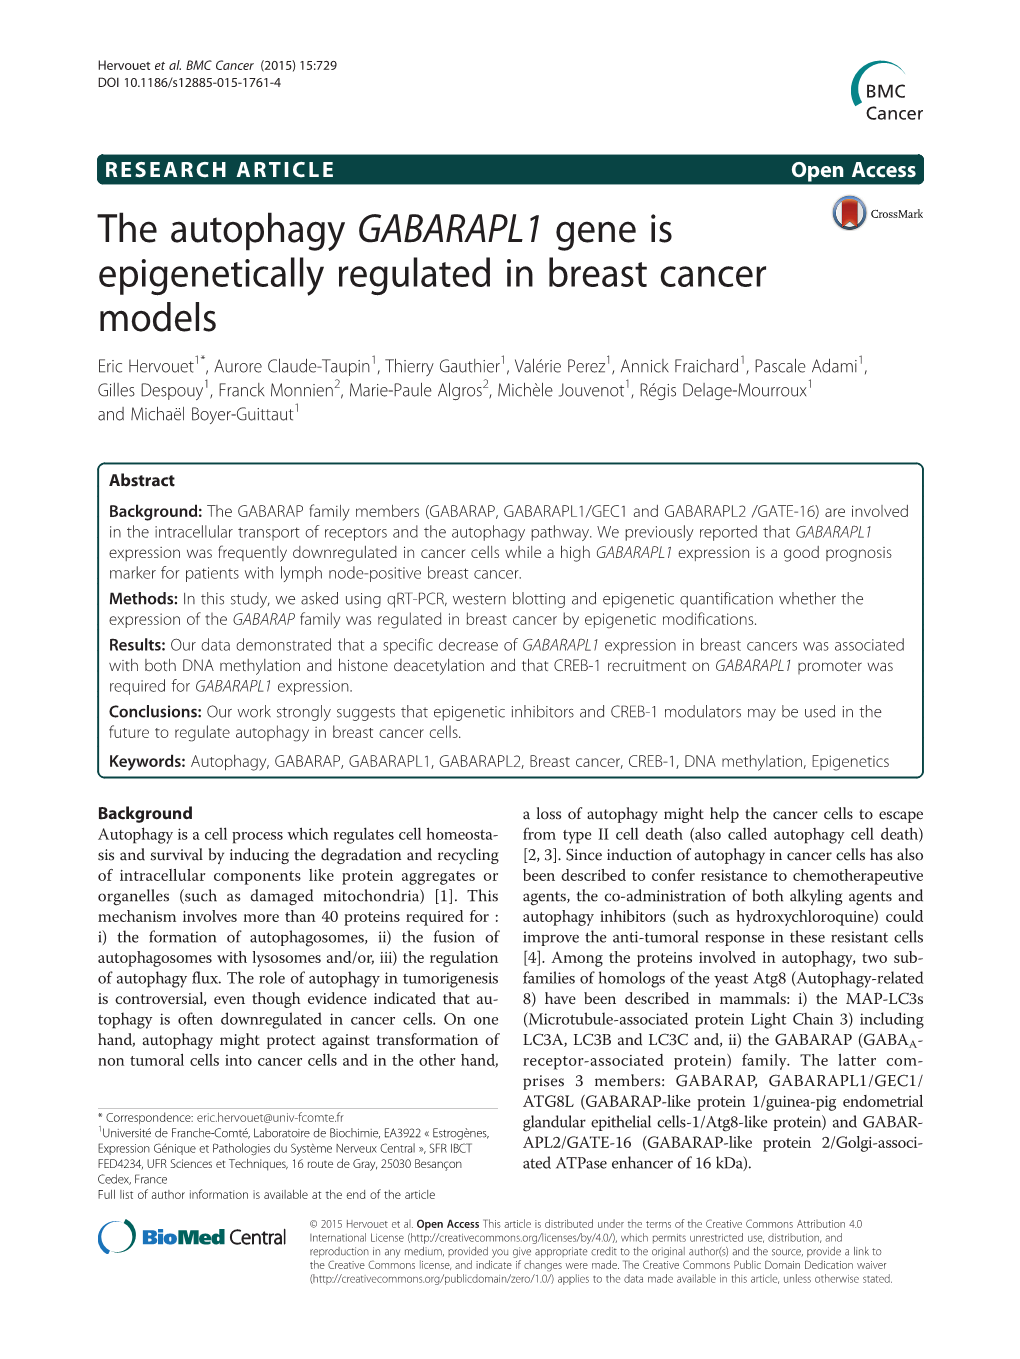 The Autophagy GABARAPL1 Gene Is Epigenetically Regulated in Breast